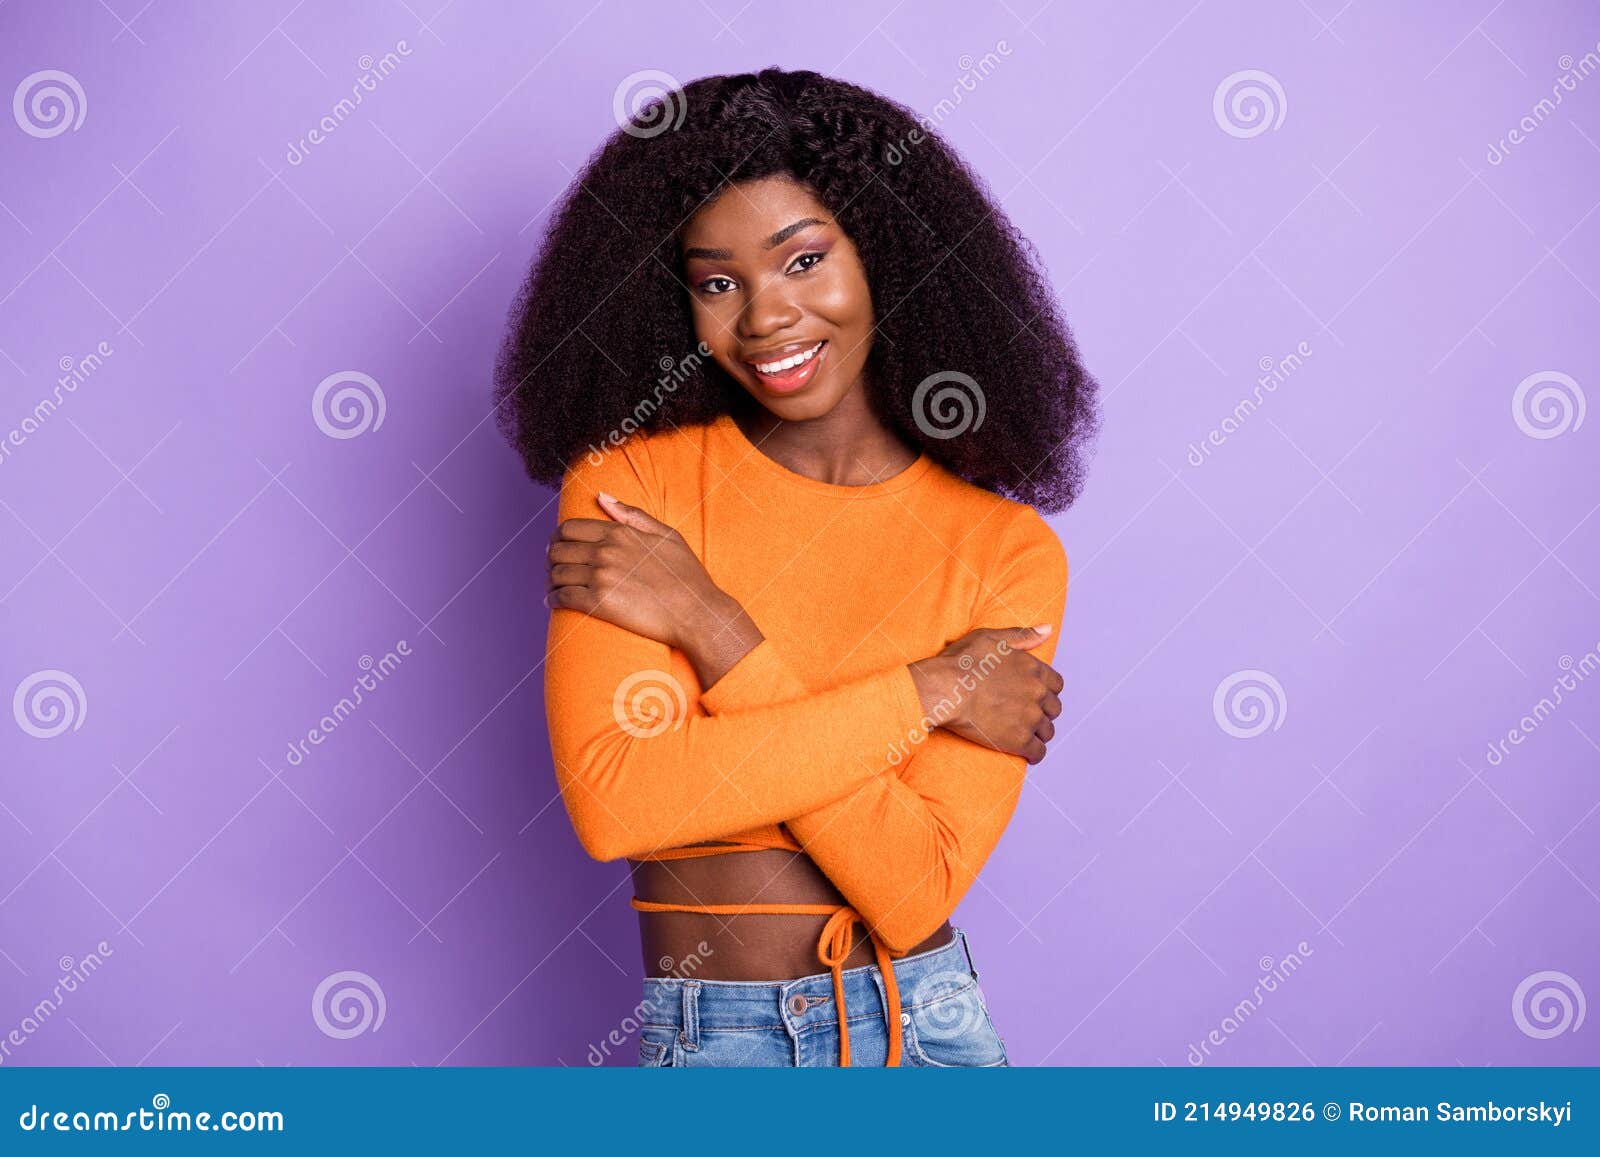 photo of shiny sweet dark skin lady wear orange shirt embracing herself  violet color background